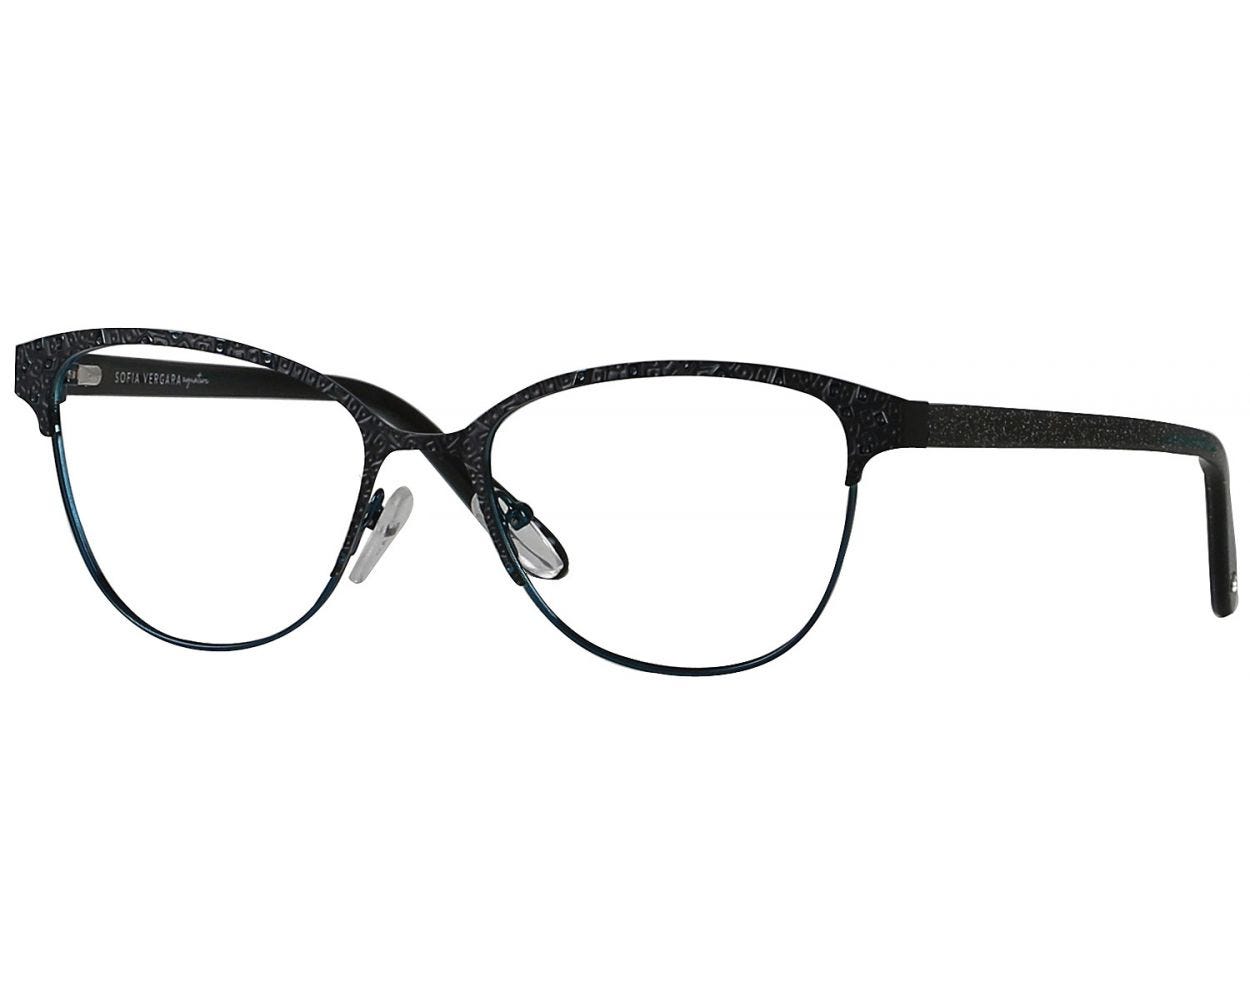 Sofia Vergara Eyeglasse 144200